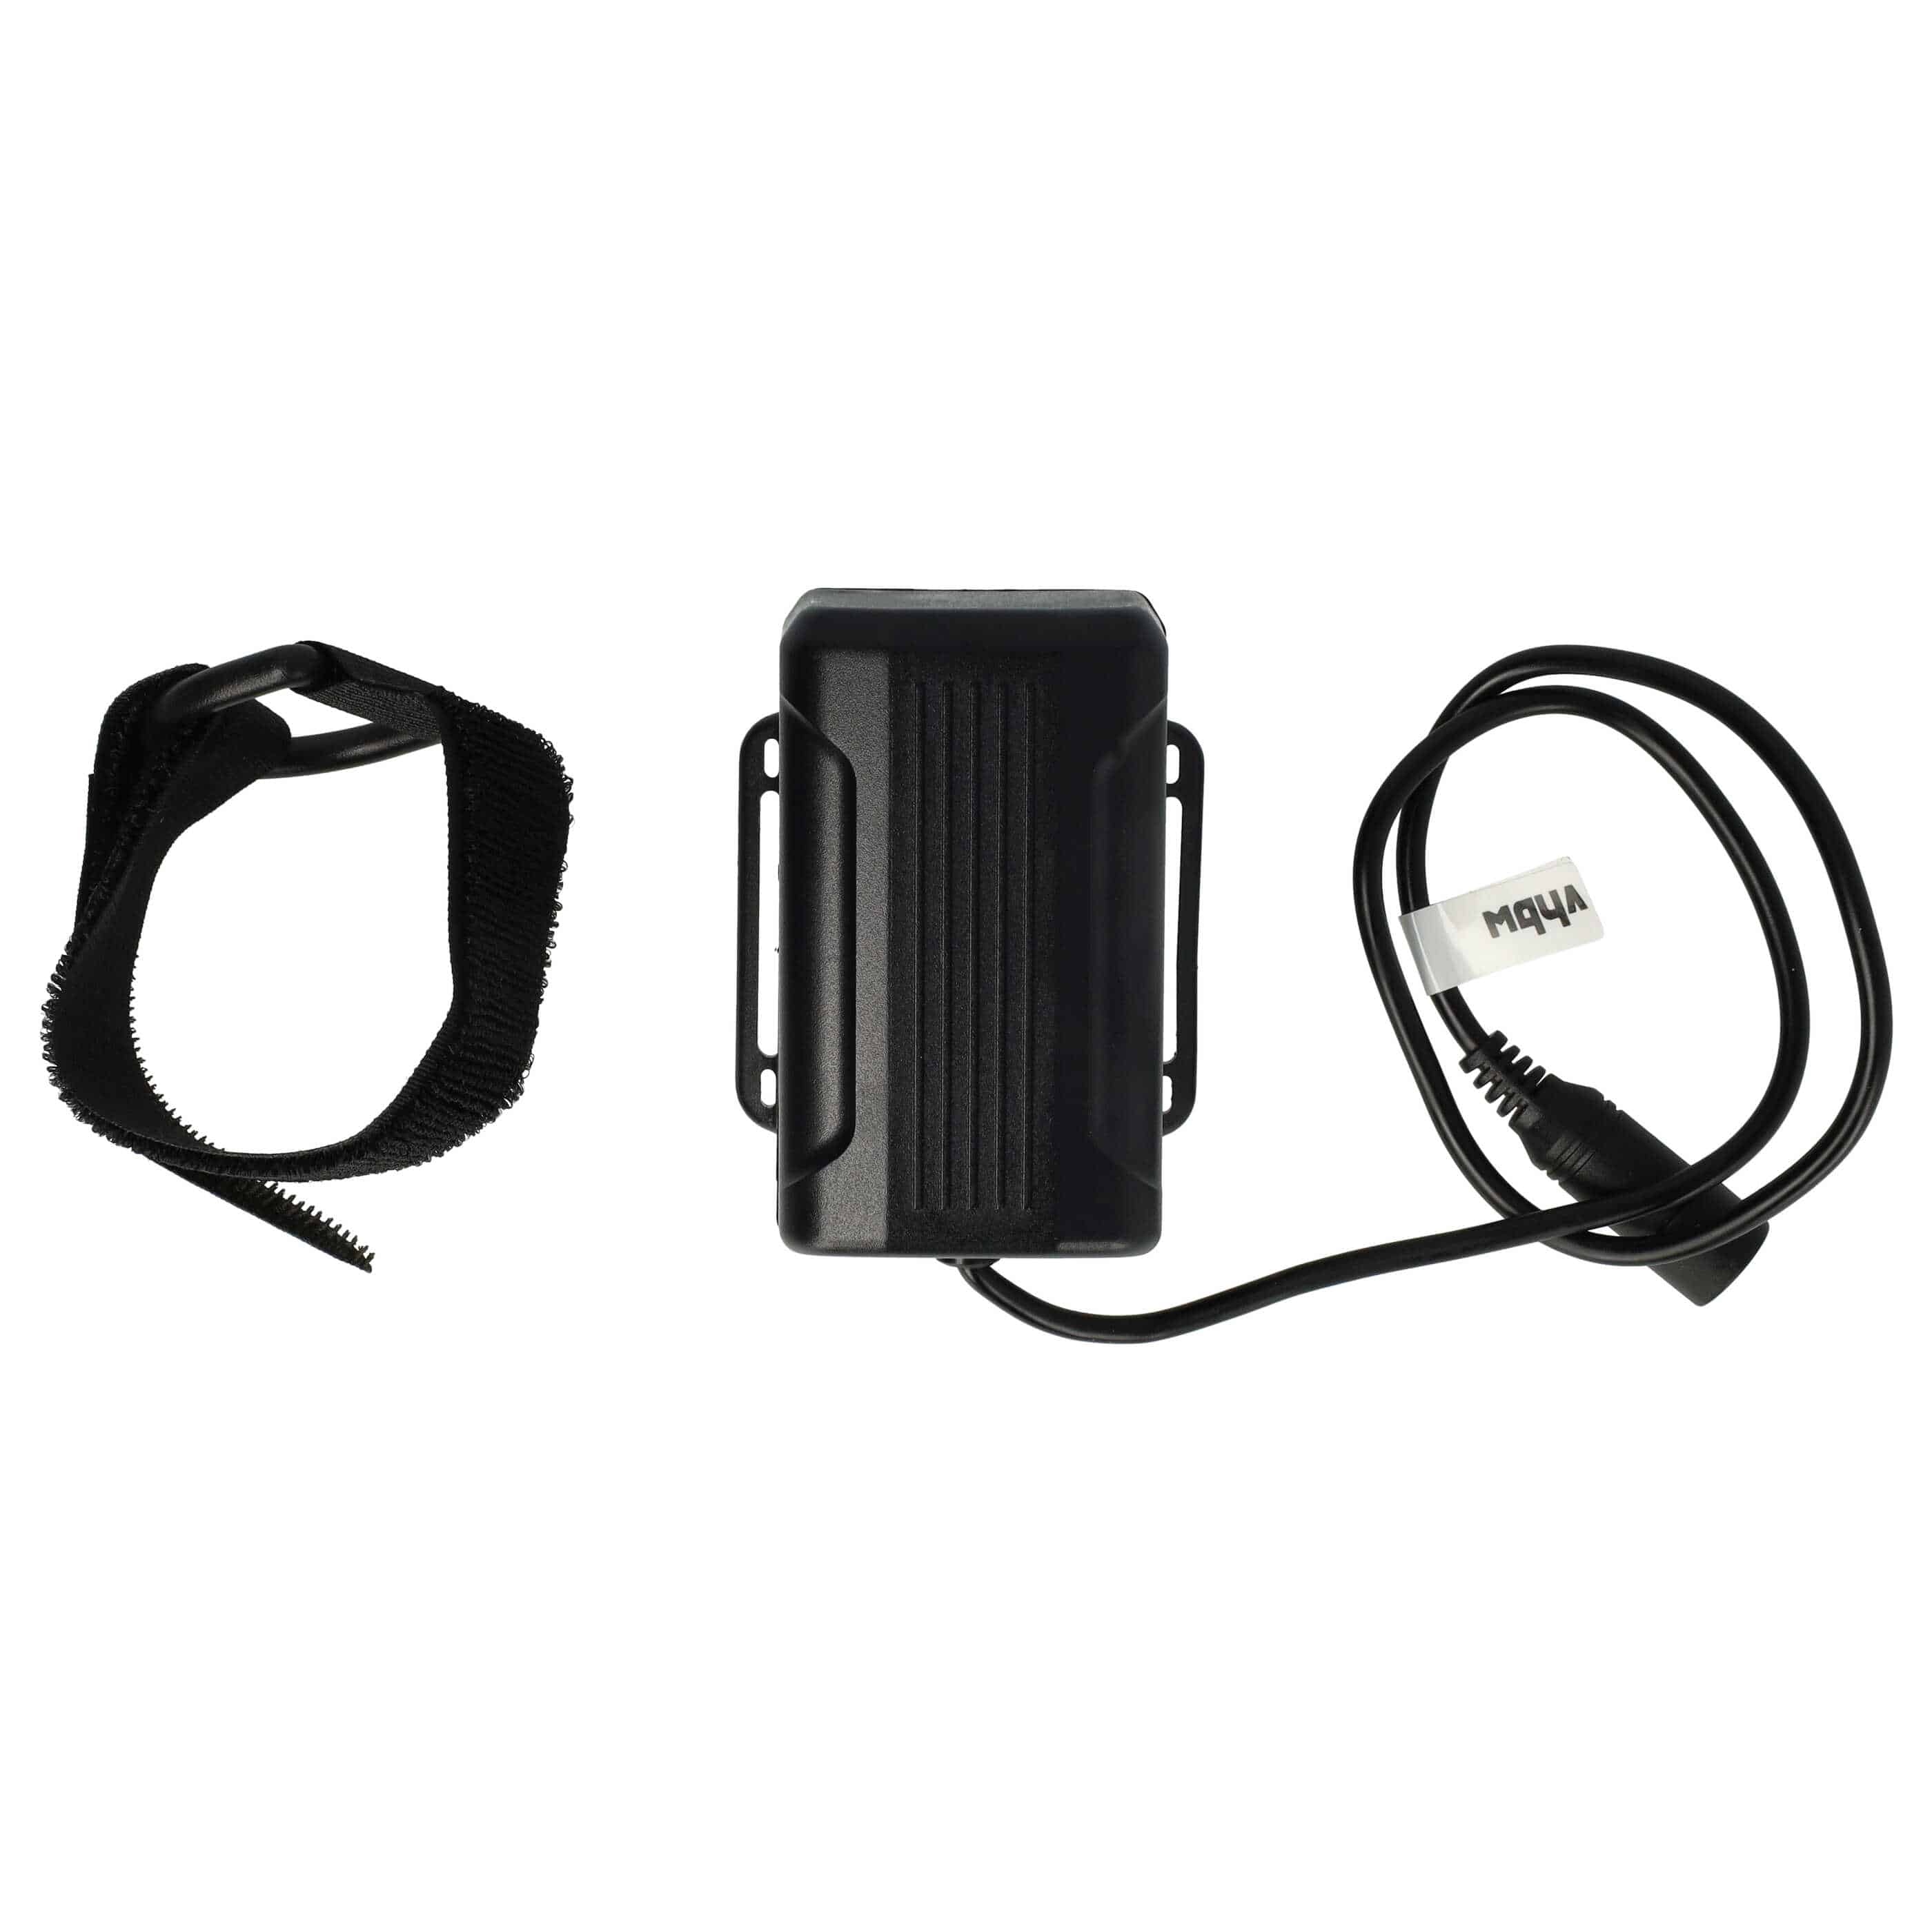 Li-Ion-battery pack- 6000mAh 8.4V waterproof - for bicycle lamp light